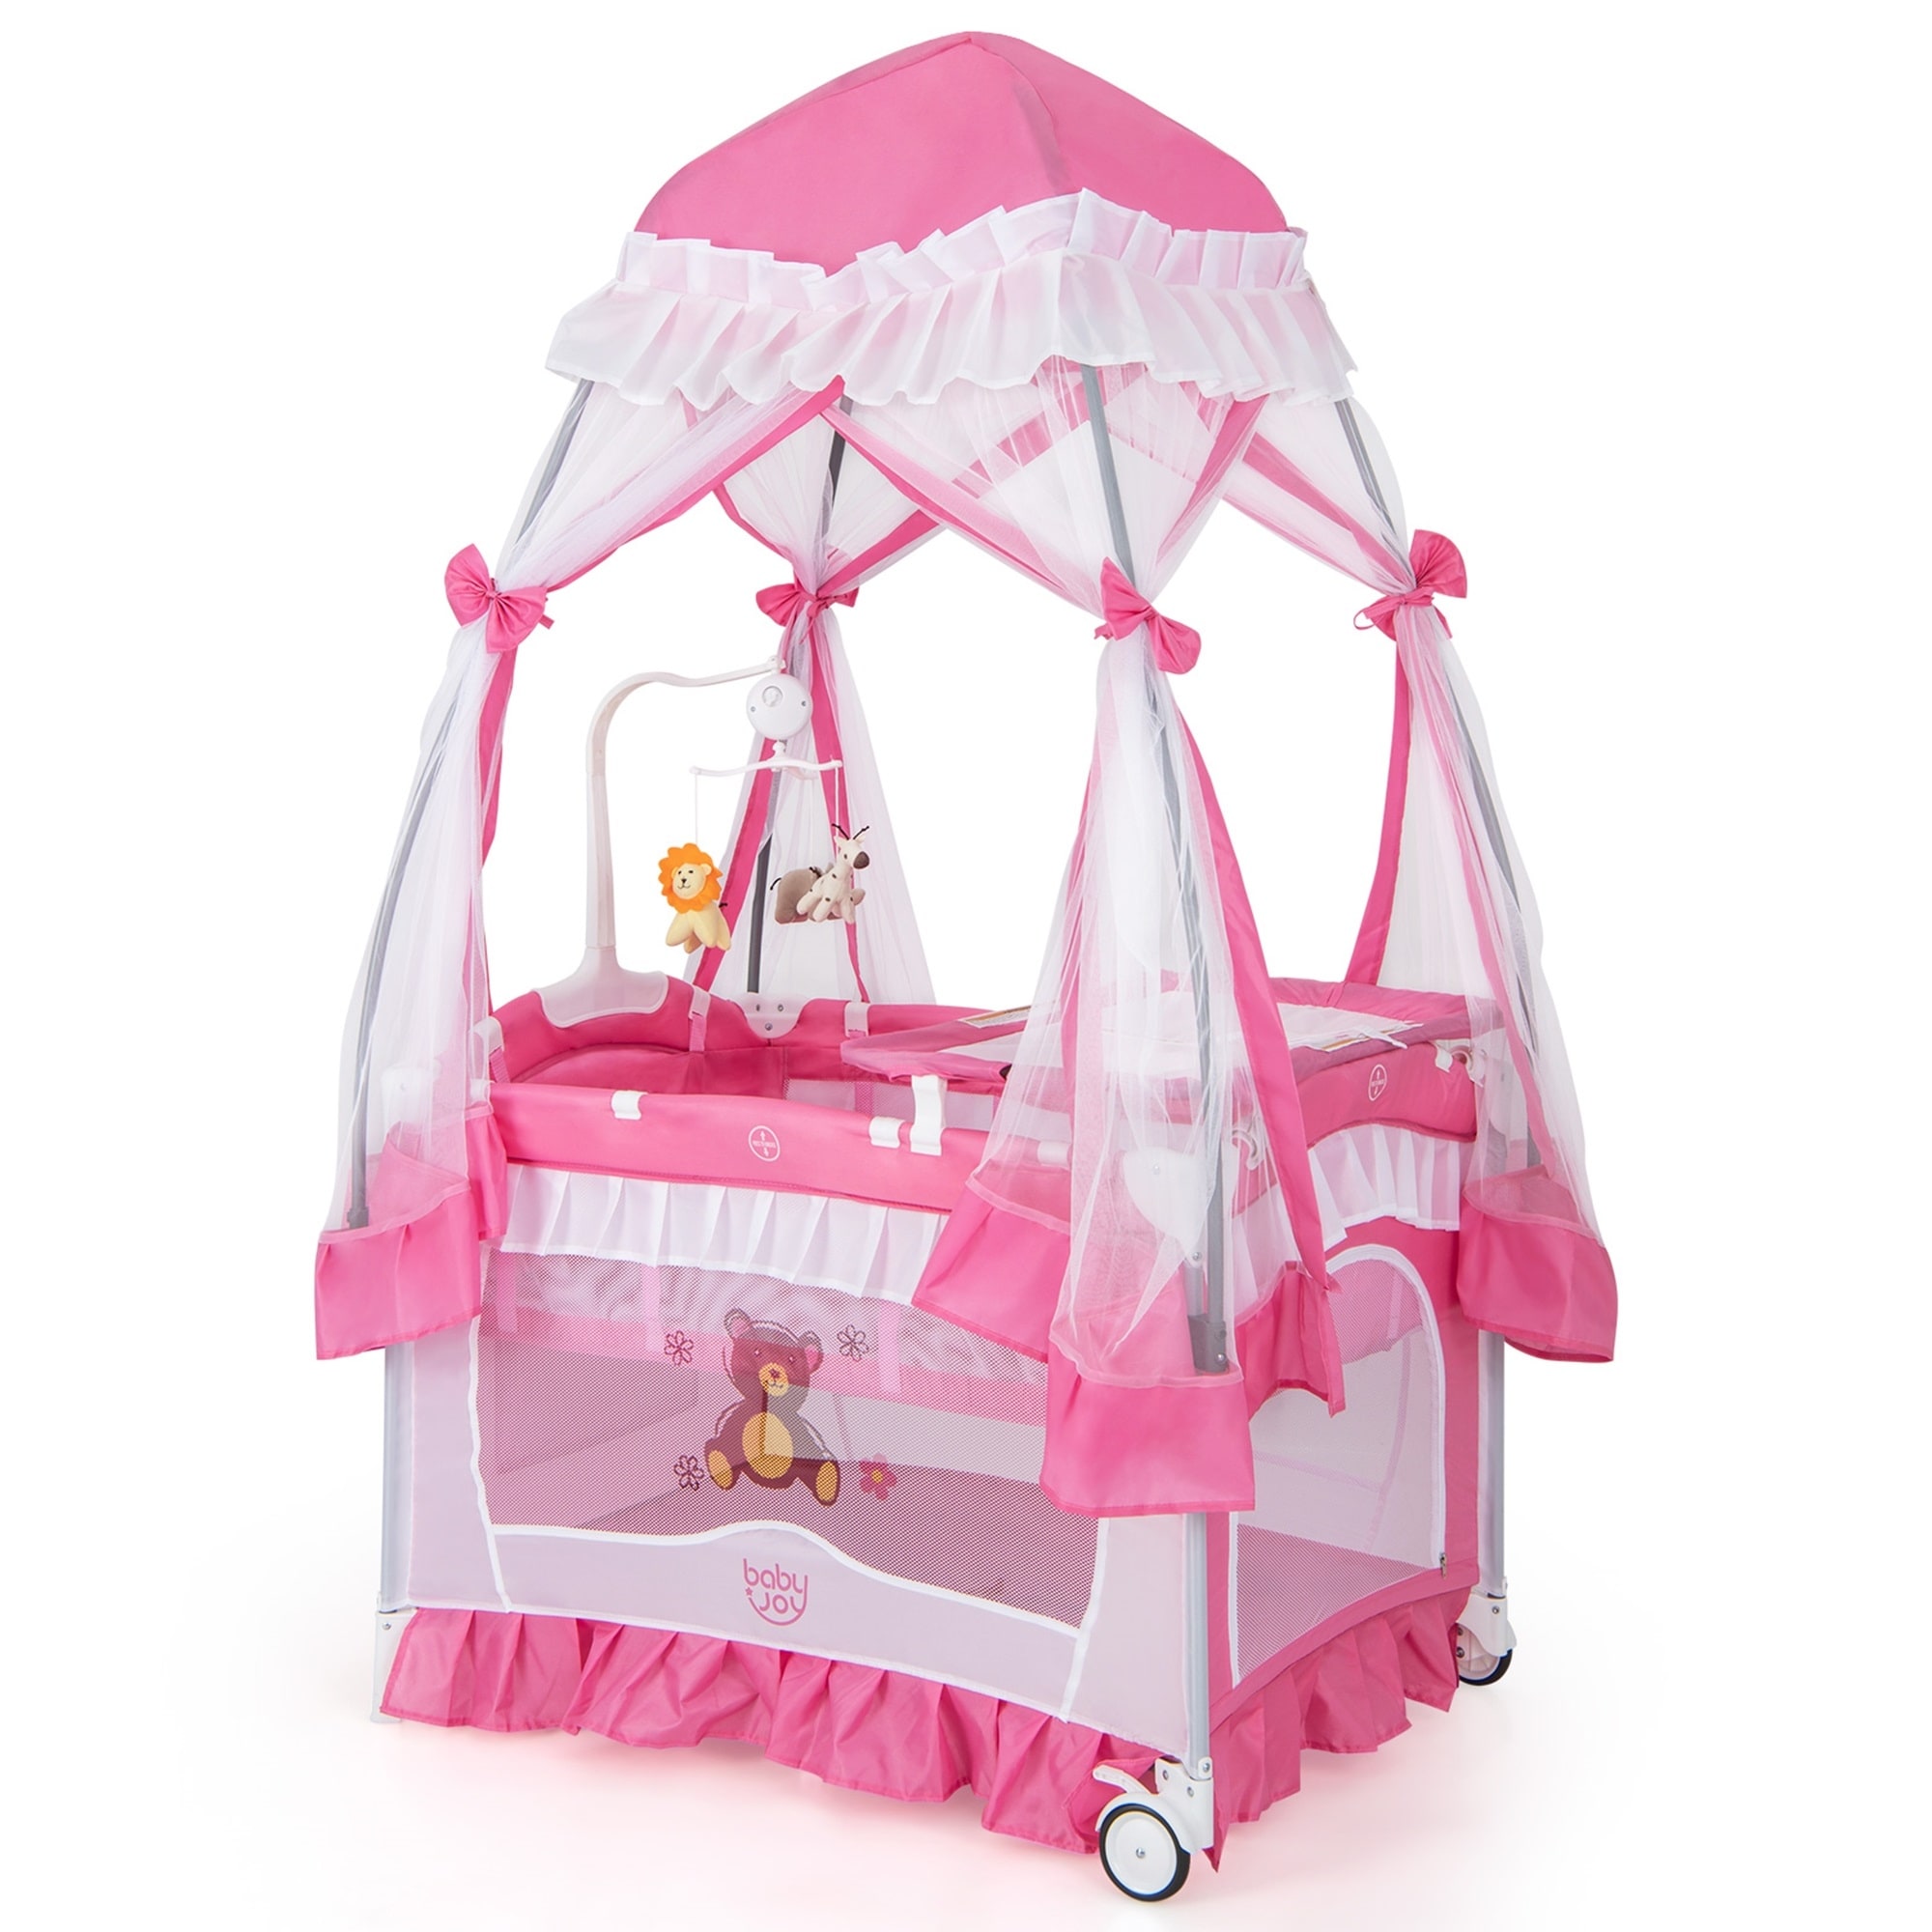 Babyjoy Portable Baby Playpen Crib Cradle Changing Pad Mosquito Net